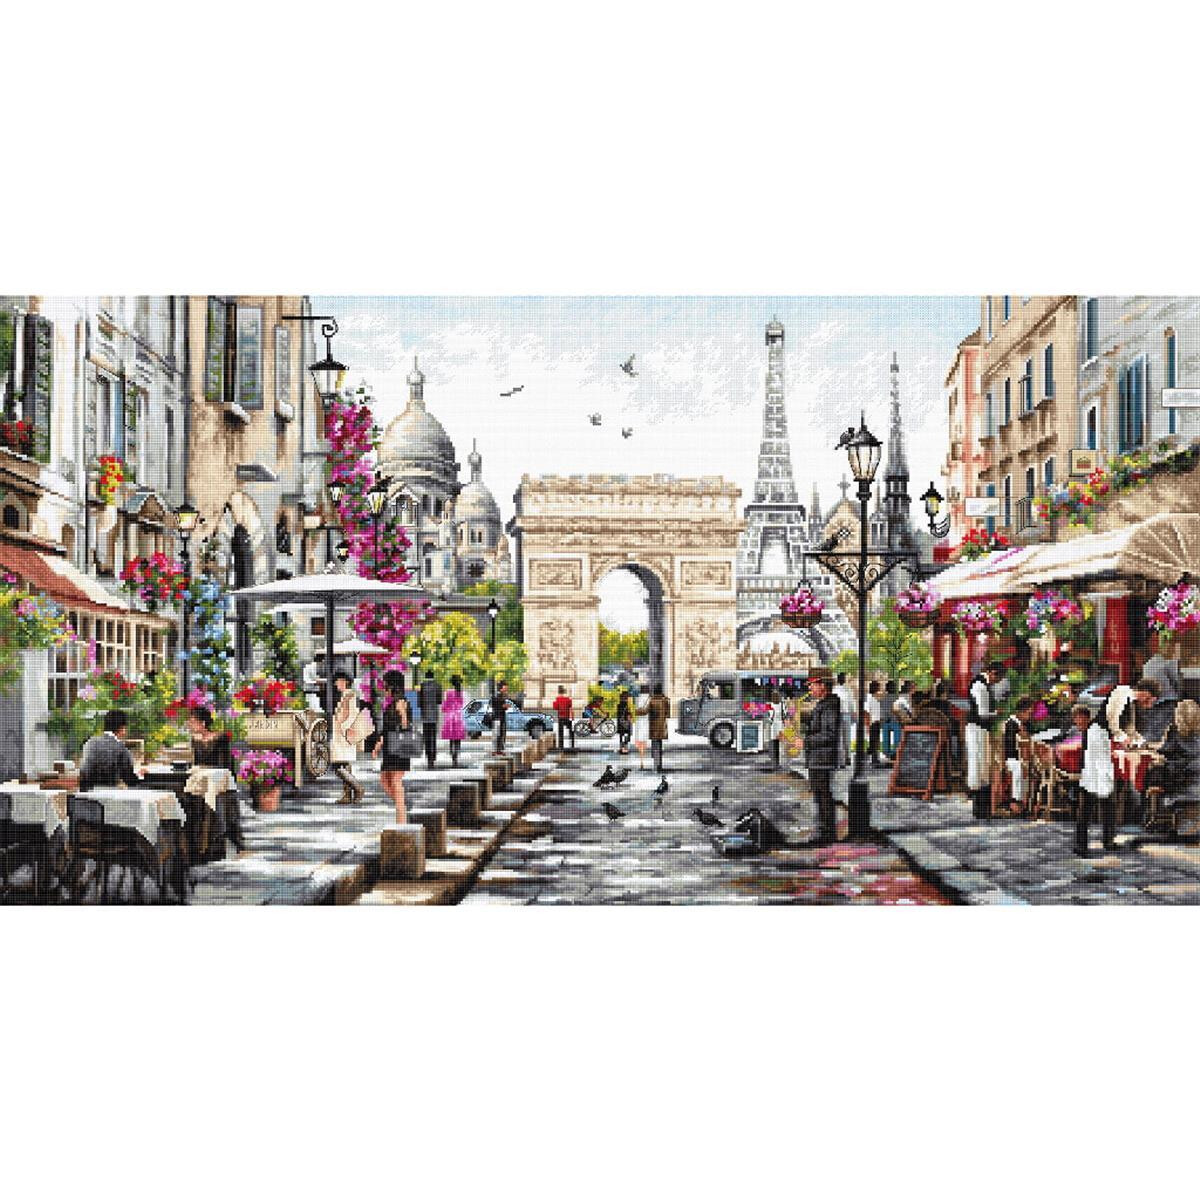 A lively Parisian street scene with the Arc de Triomphe...